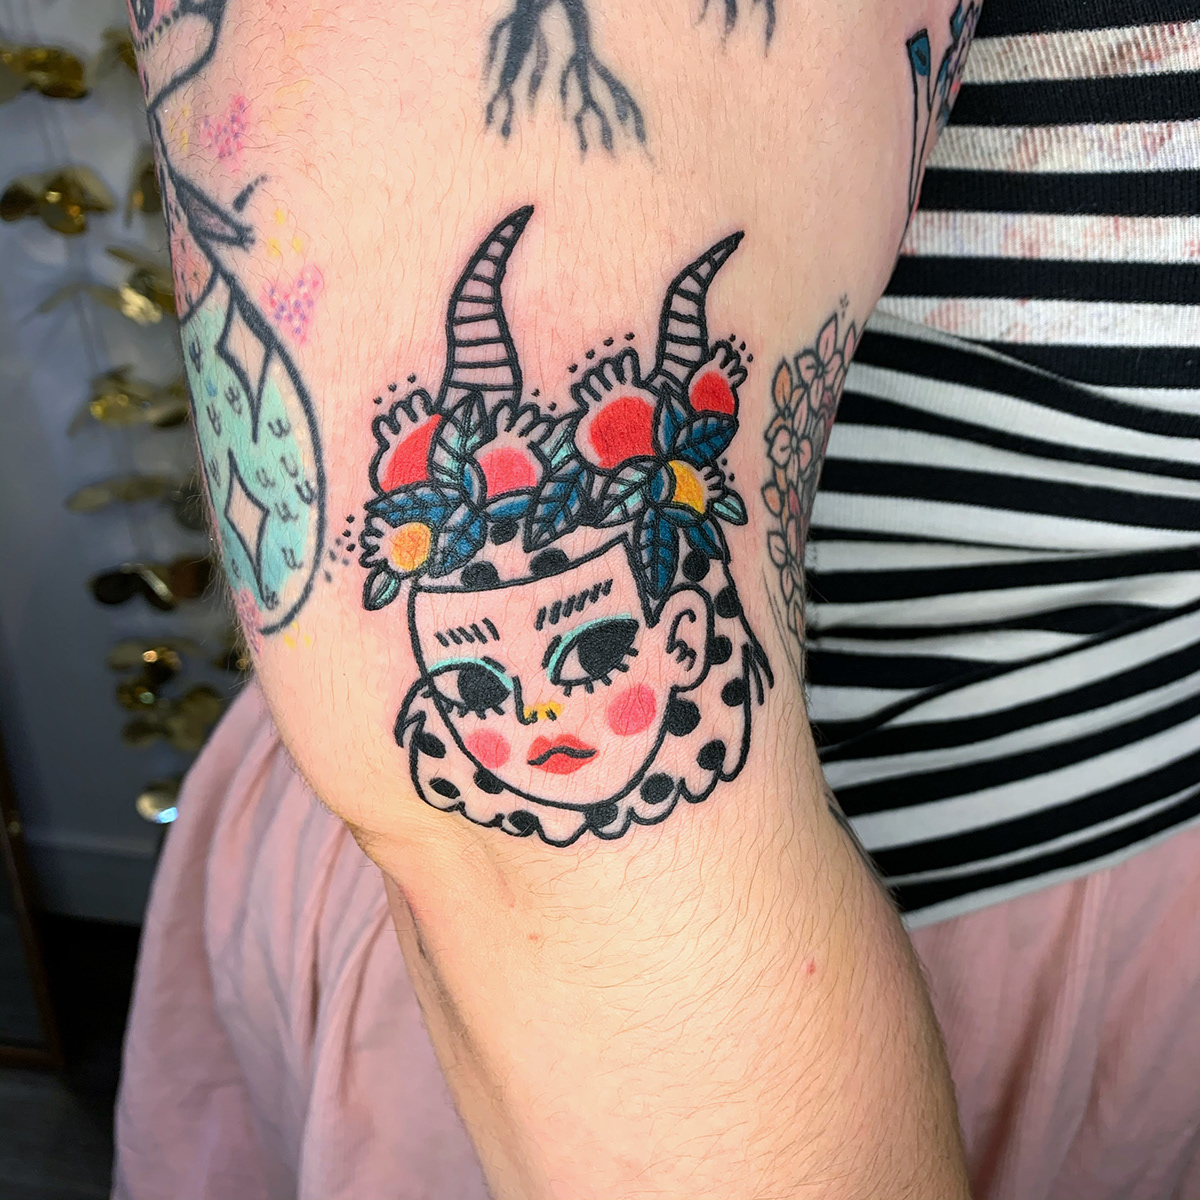 El Salvador Paris tattoo tattoo flash witch goat demon floral skull